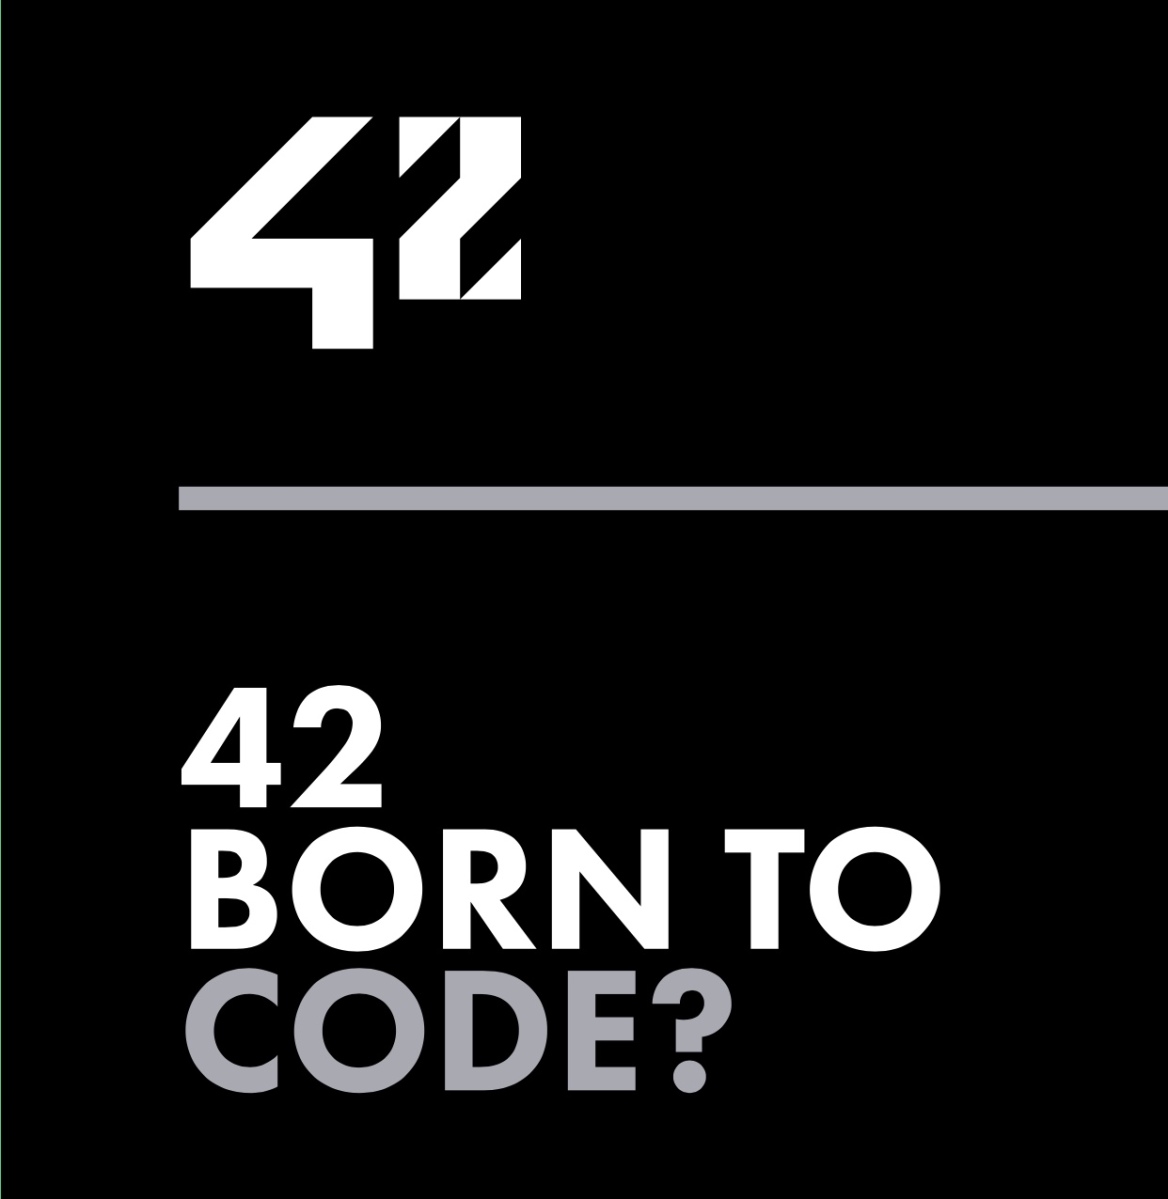 42 born to code?